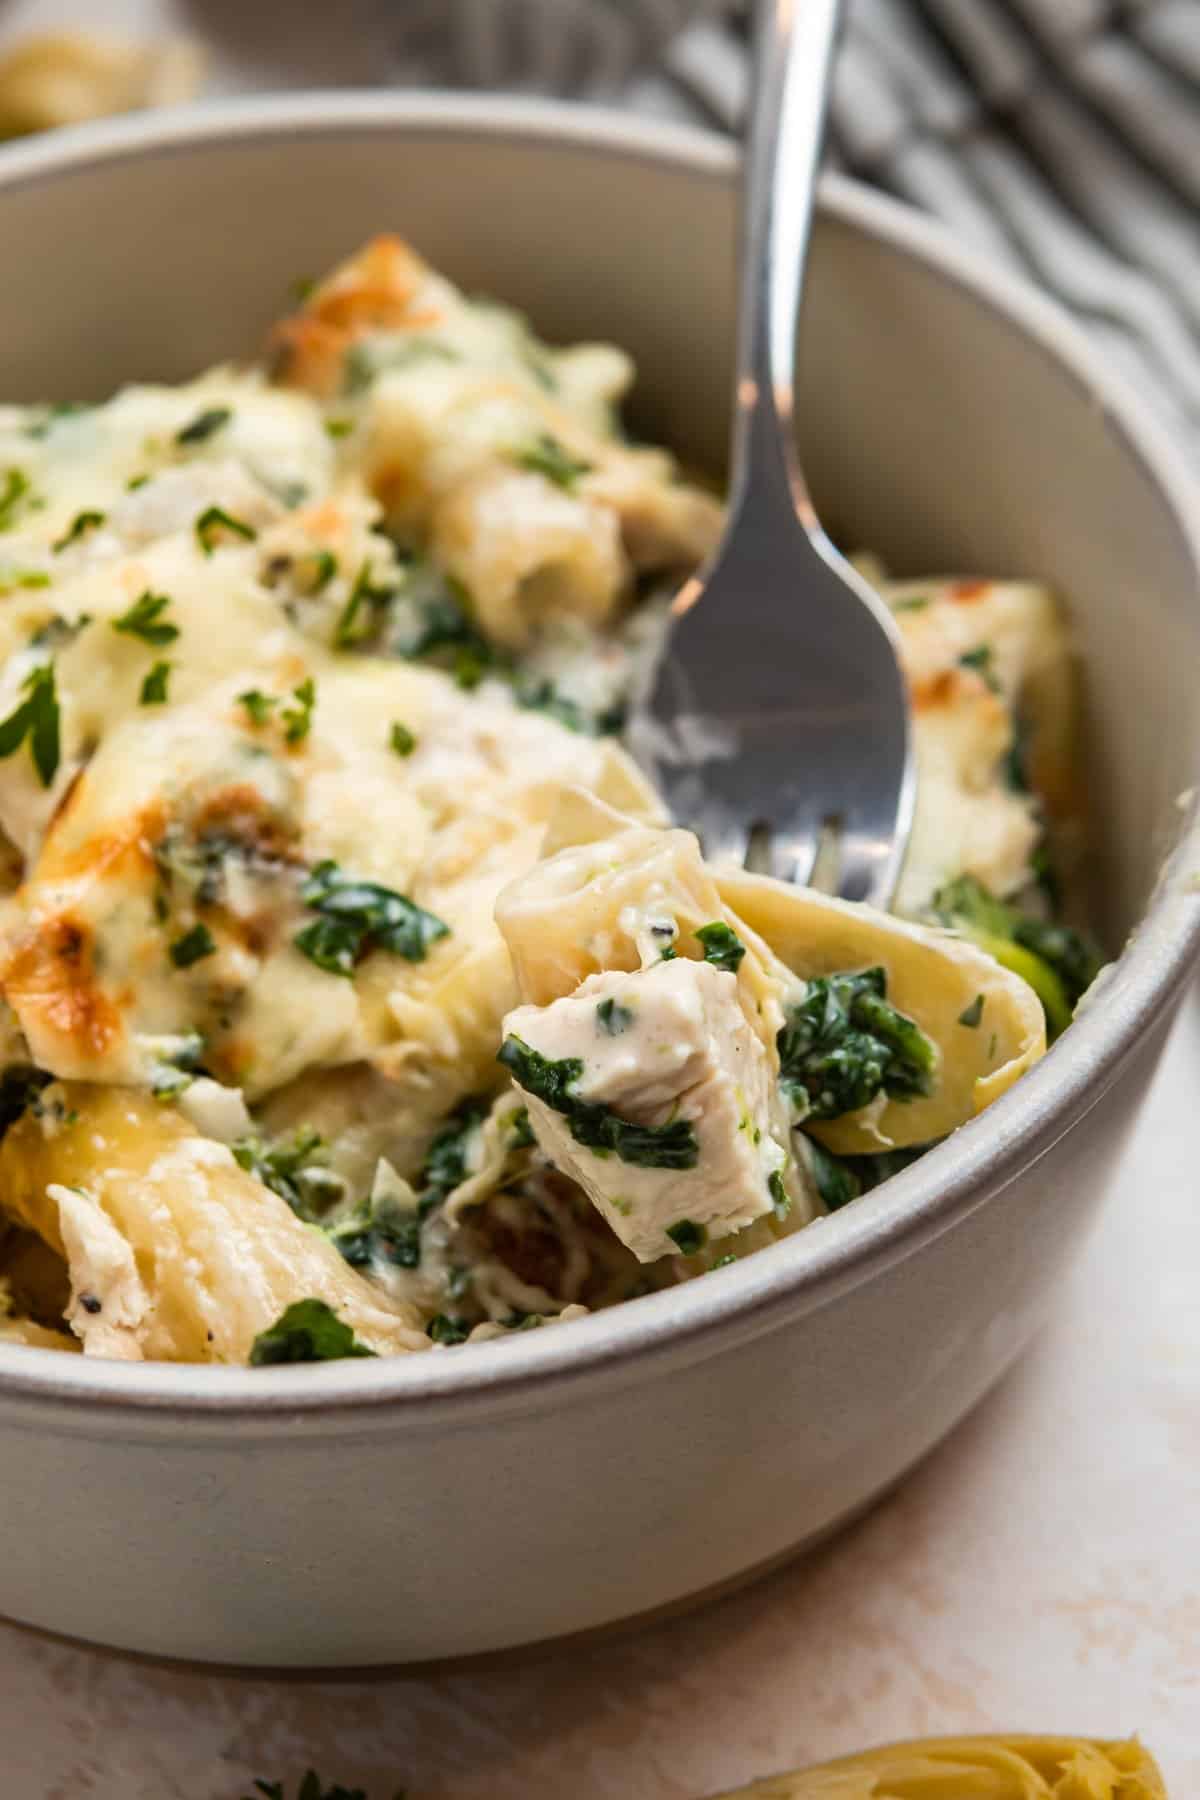 Spinach, chicken artichoke pasta casserole in bowl with fork.